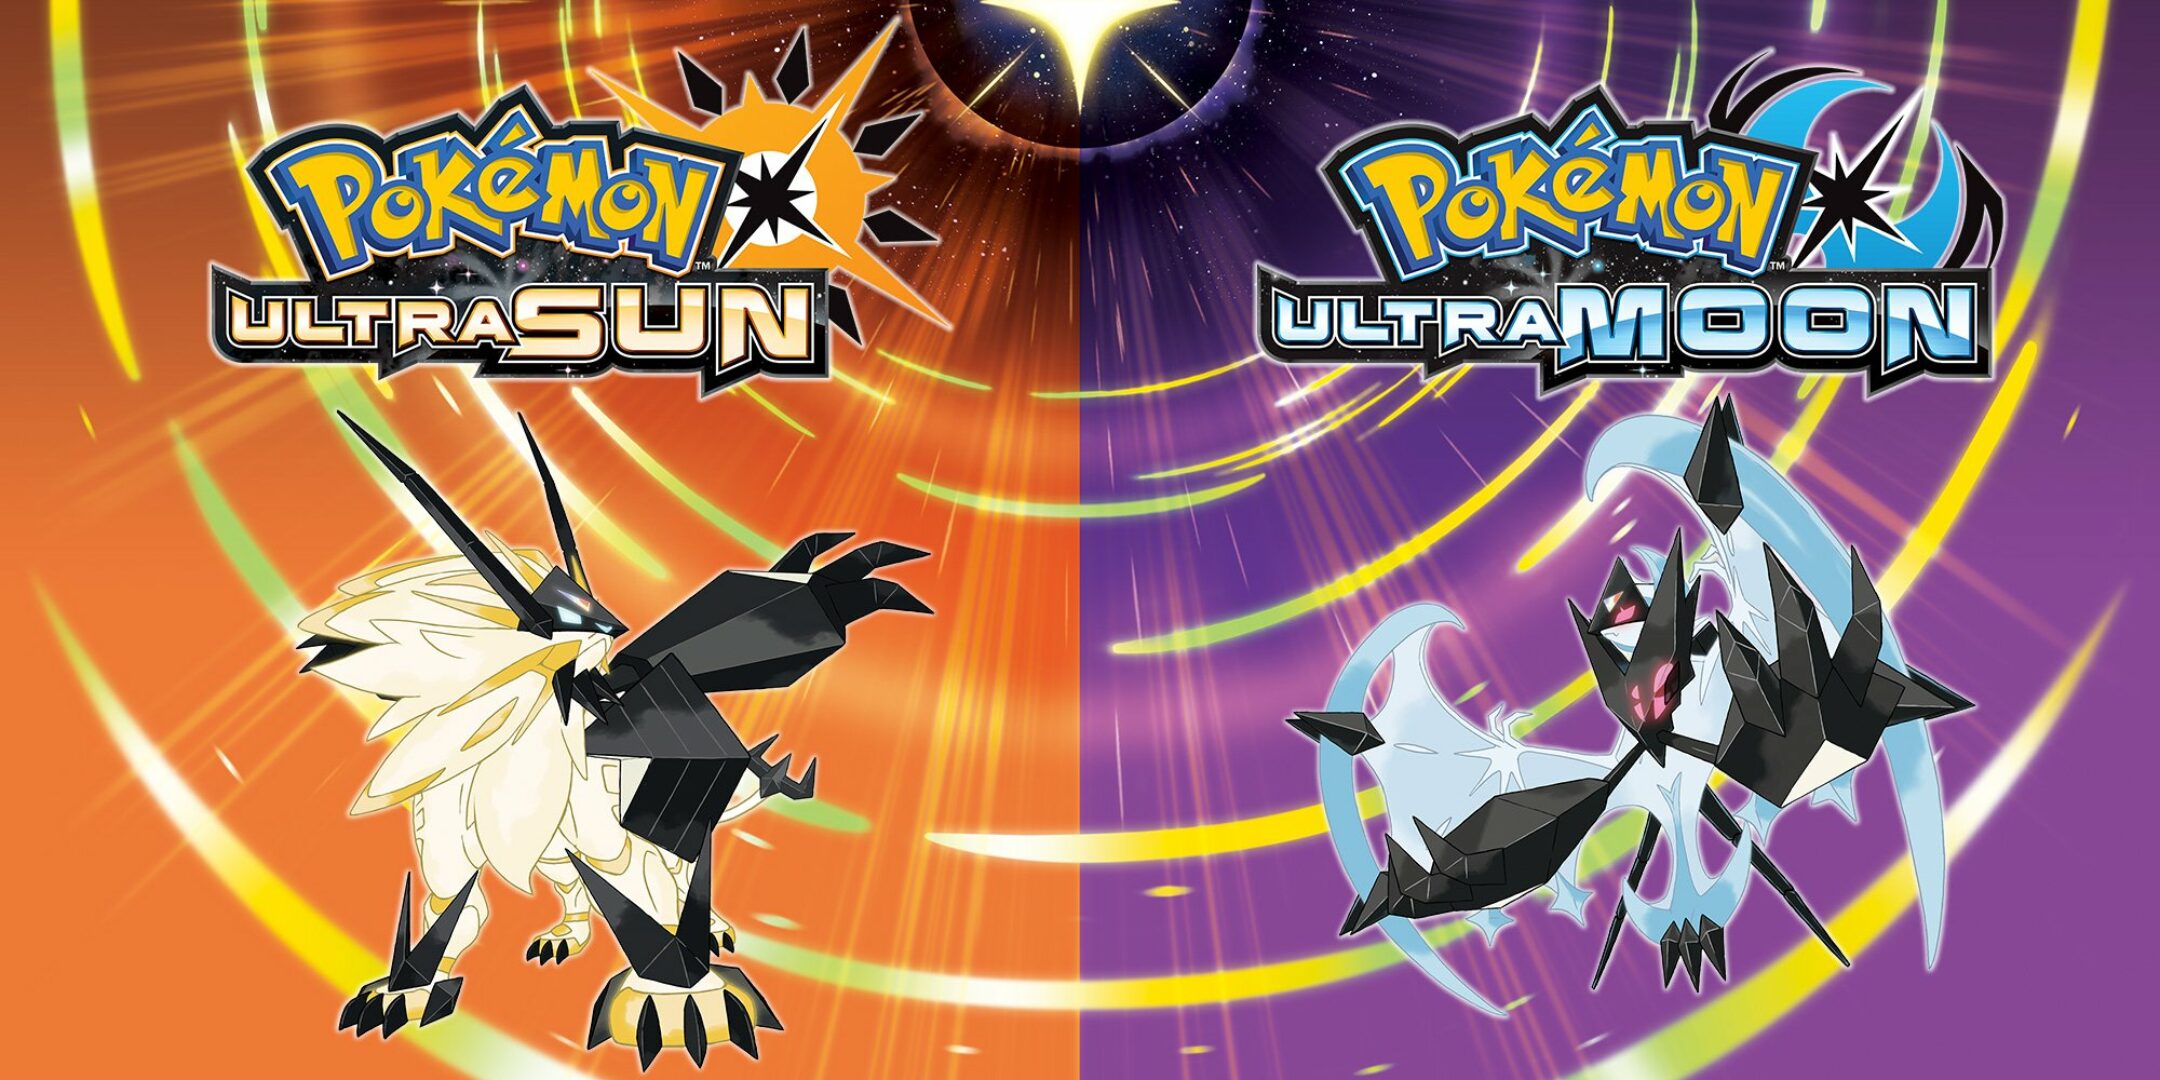 New Details & Trailer Revealed For Pokémon Ultra Sun And Pokémon Ultra Moon